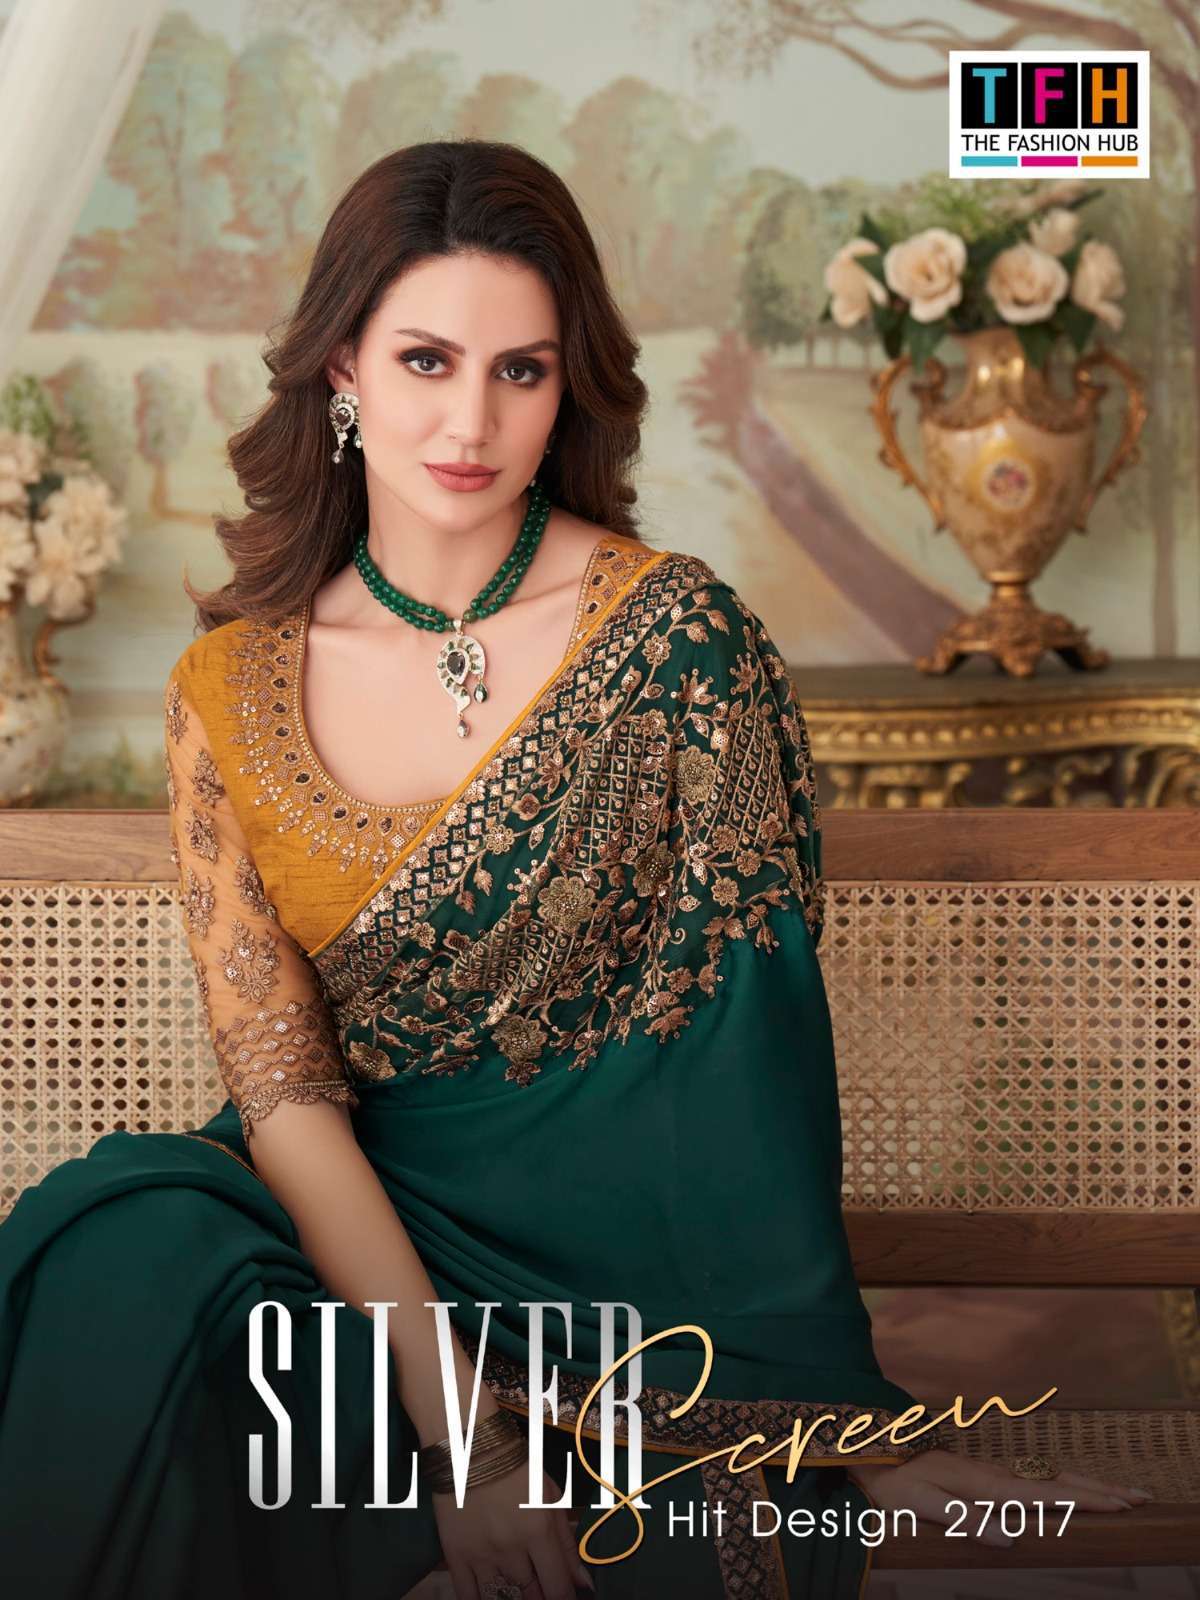 tfh silver screen hit design 27017 milano silk saree